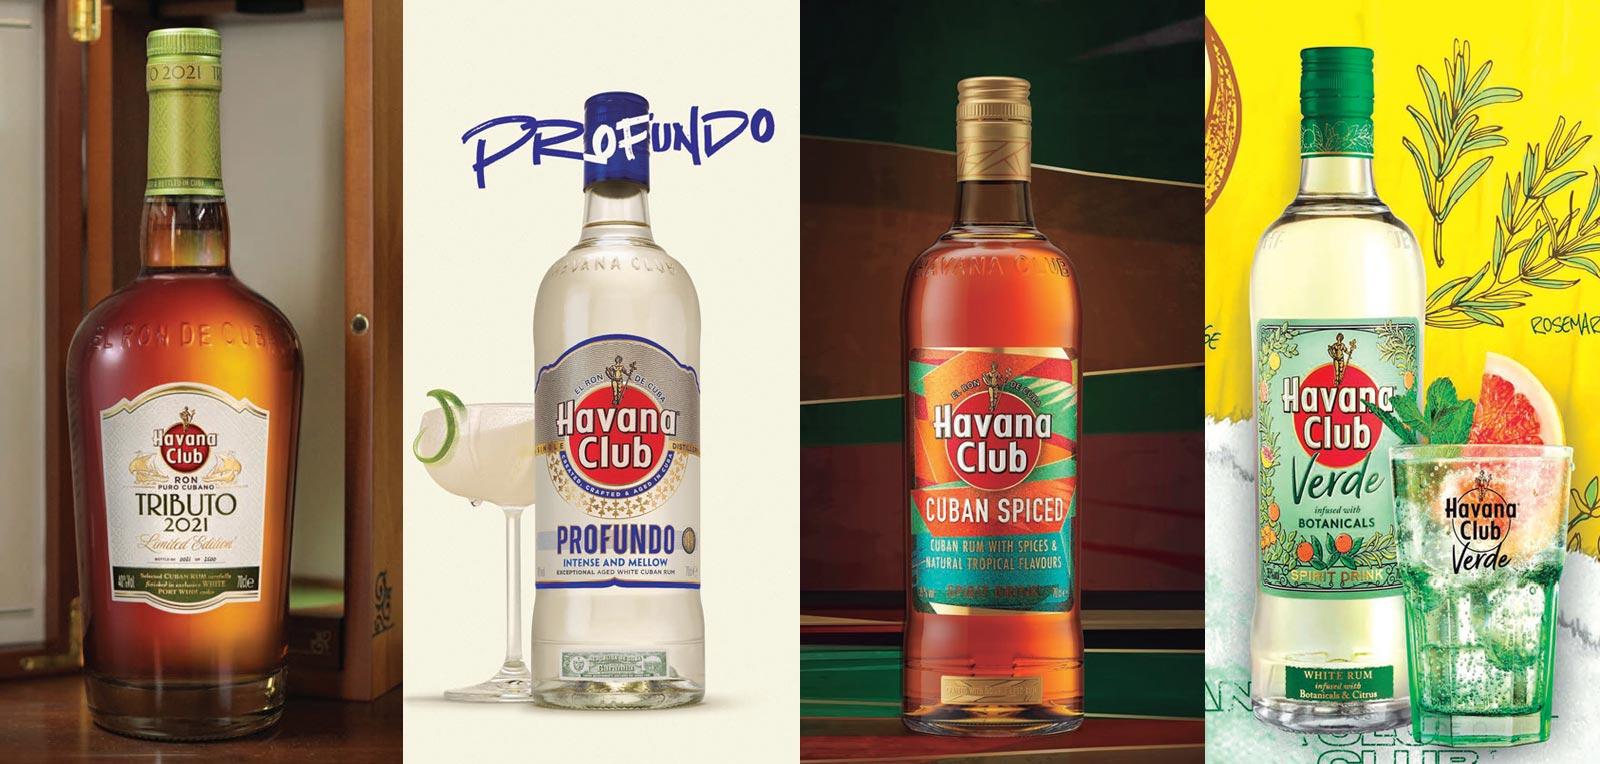 Havana Club, innovation as a premise for development